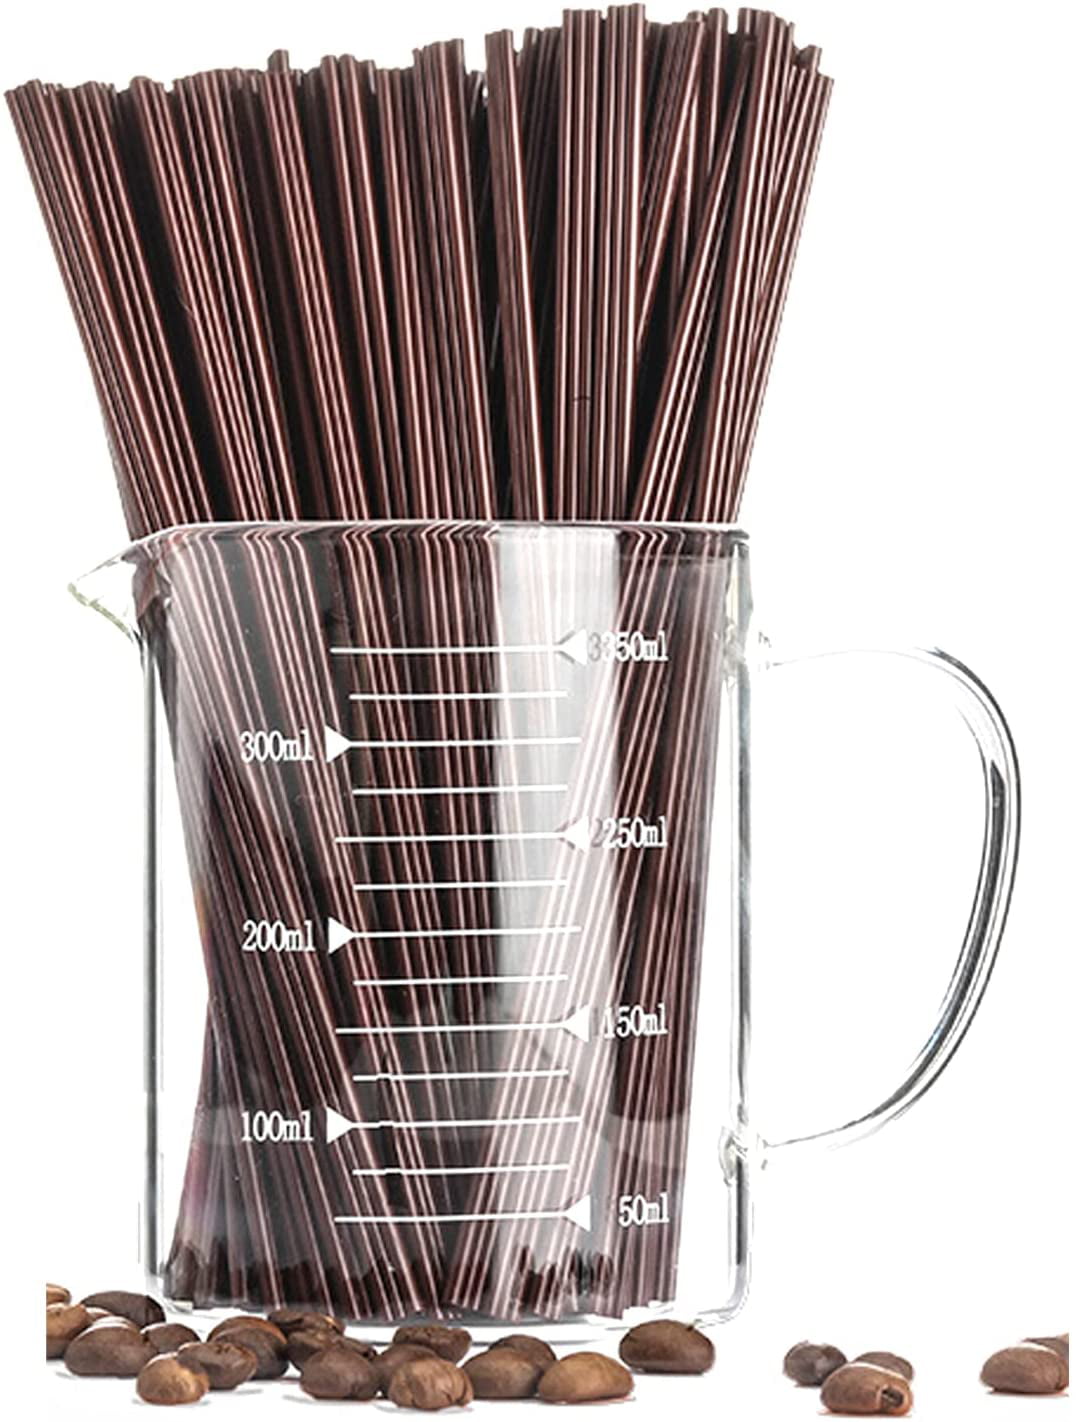 SimplyImagine Stir Stick Dispenser - Up to 7 Inch Plastic Stirrer Use ONLY  - Coffee Stirrer Dispenser Storage for Long Plastic and Cocktail Drink